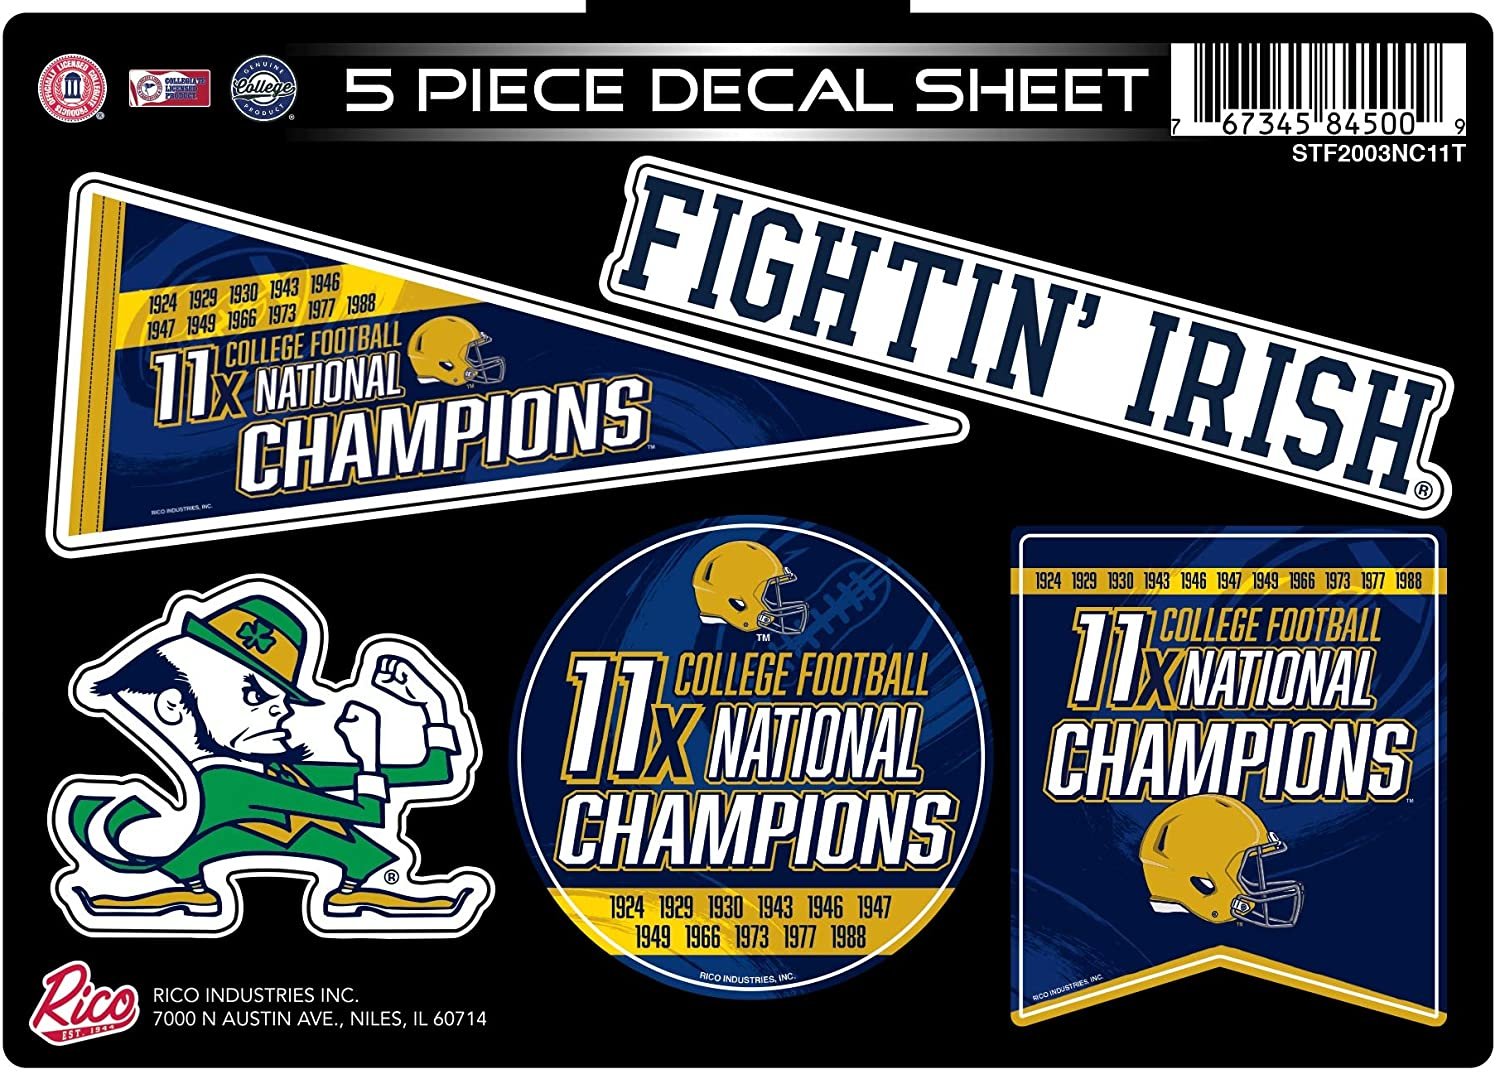 Notre Dame Fighting Irish Decal Sticker Sheet 11X Time Champions 5 Piece Multi Sheet Flat Vinyl Emblem College Football University of